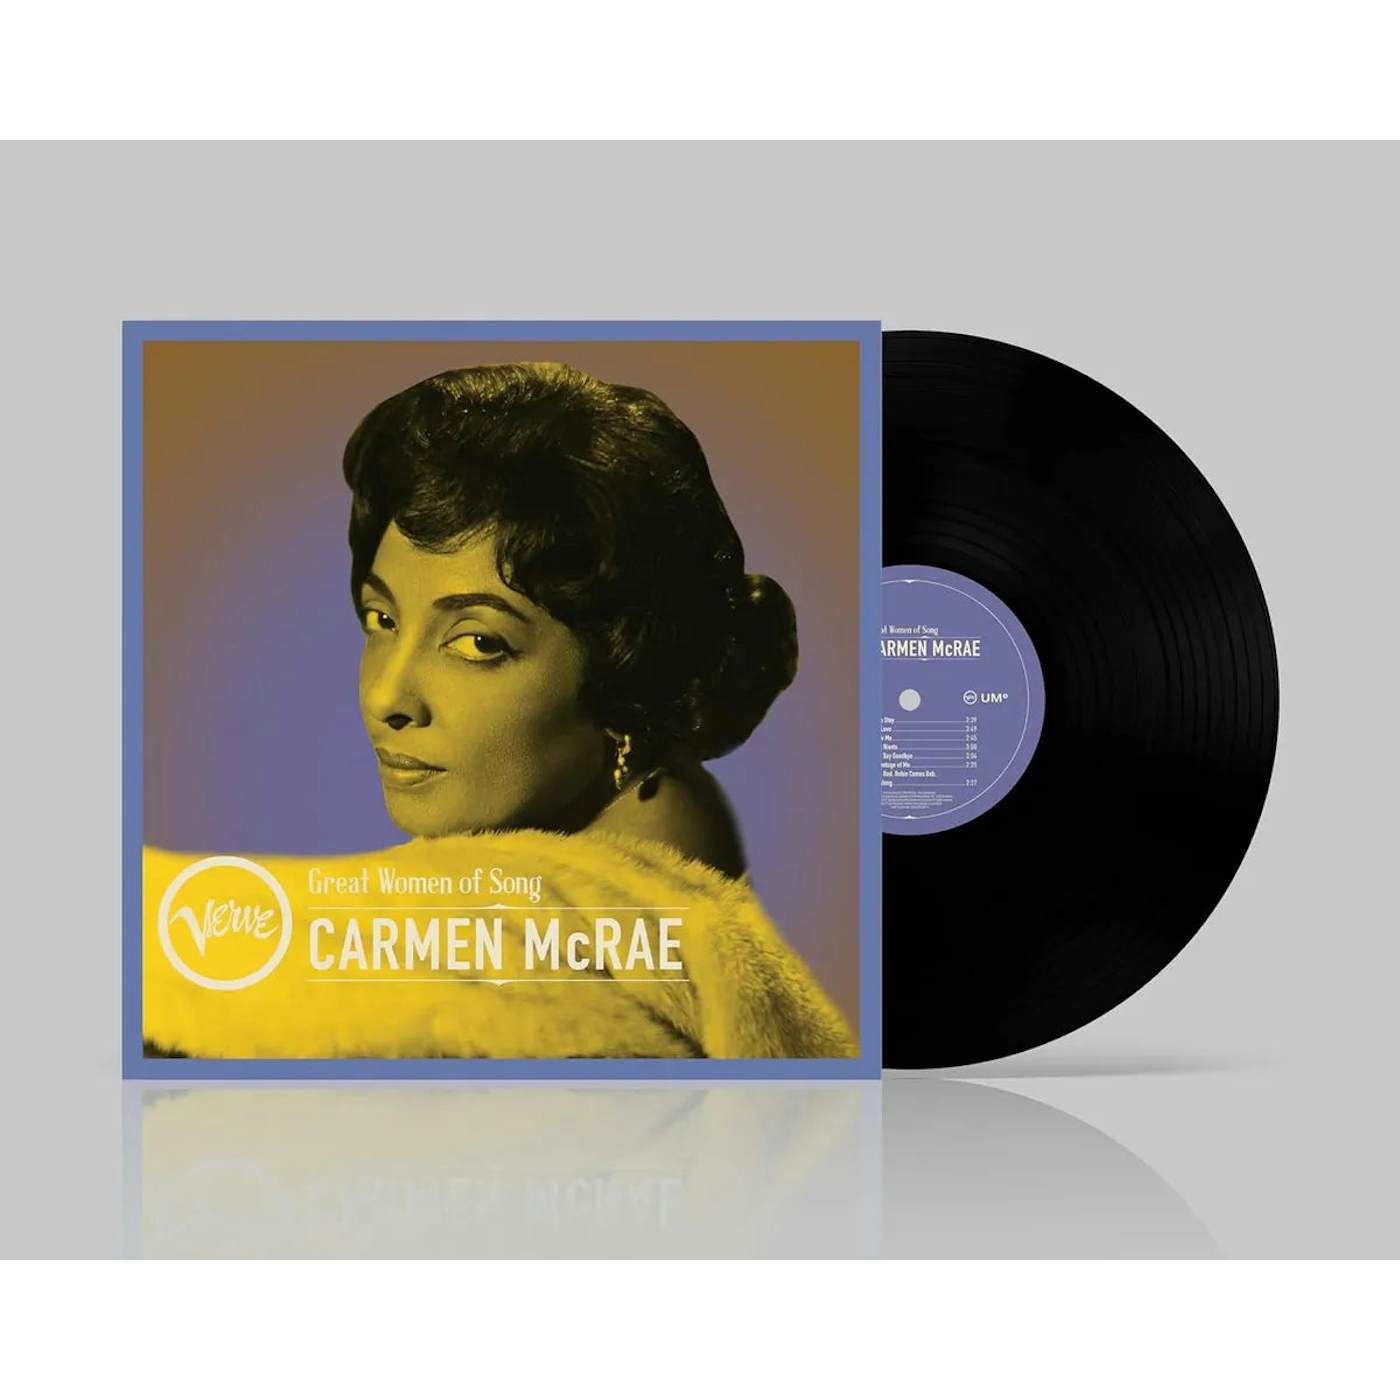 Carmen McRae - Great Women Of Song: Carmen McRae (Vinyl)